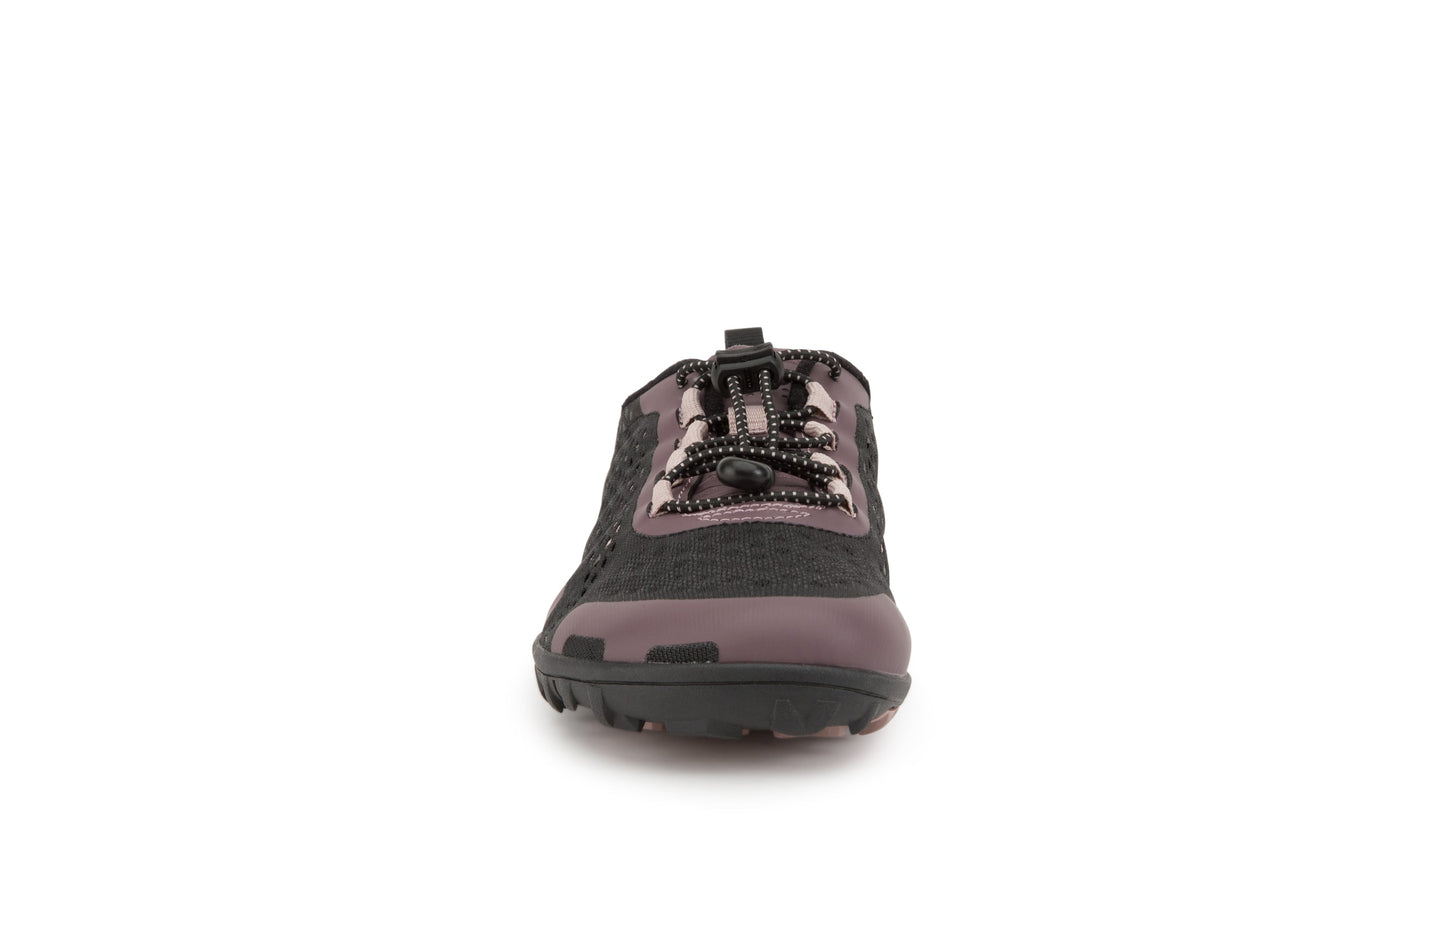 Xero Shoes Aqua X Sport Women barfods vandsko til kvinder i farven sparrow, forfra